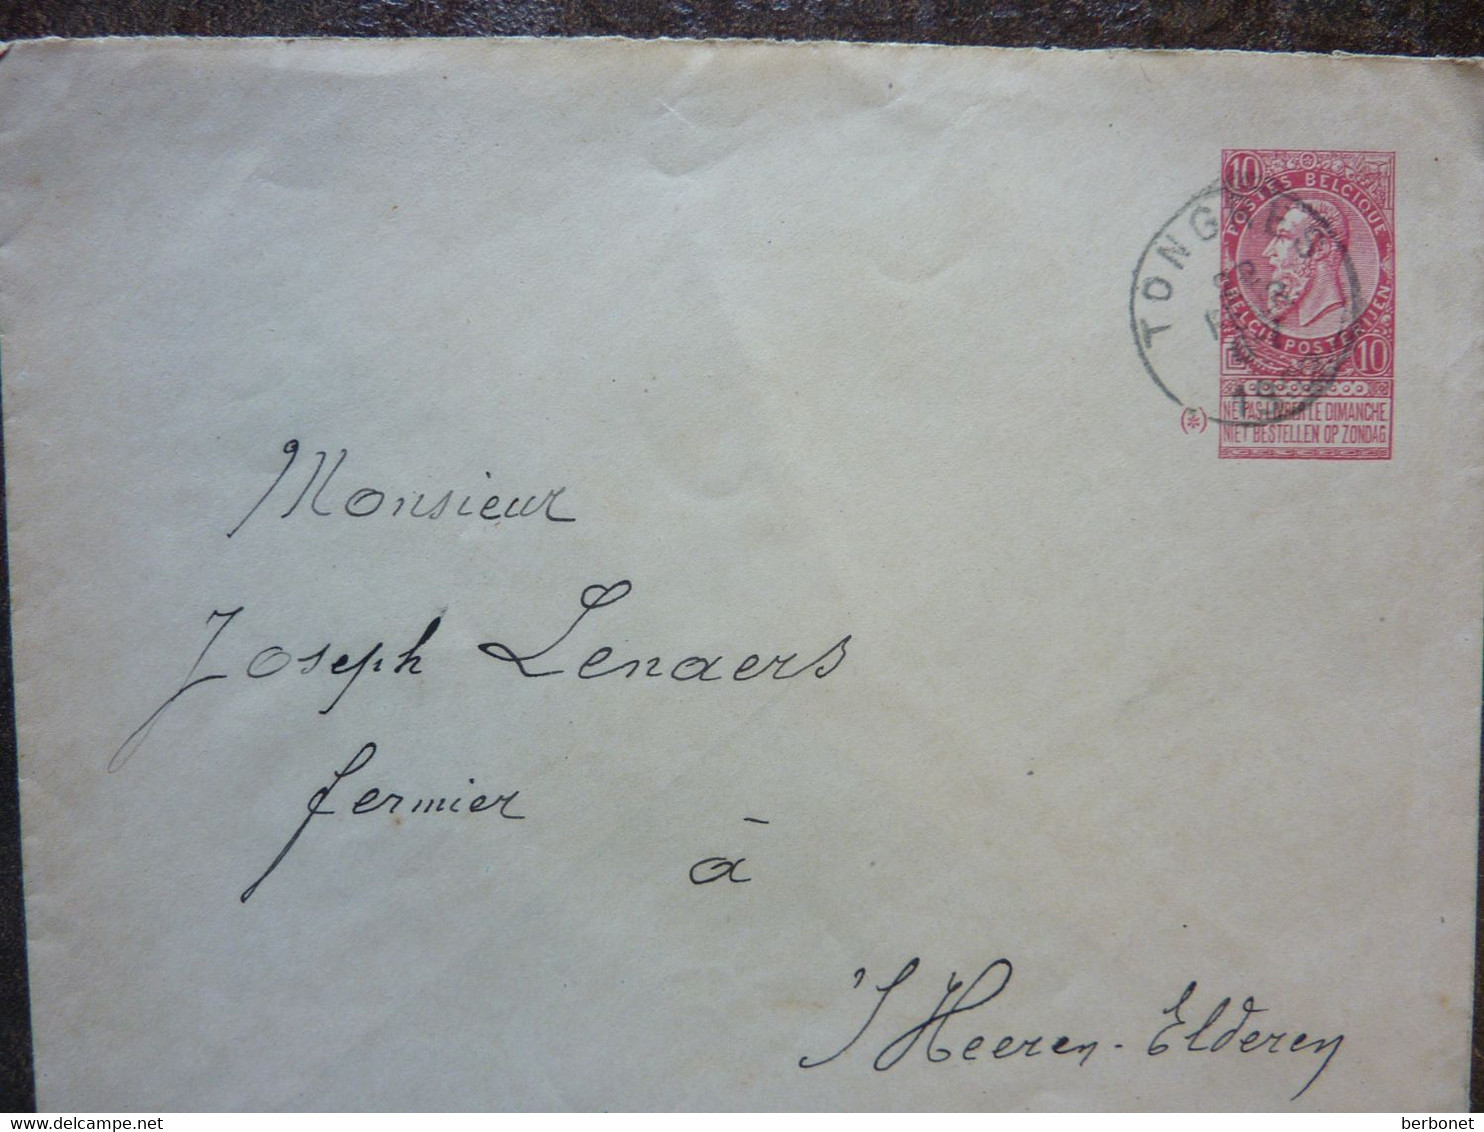 Lettre  Entier Postal Cachet Tongres   PERFECT - Letter Covers